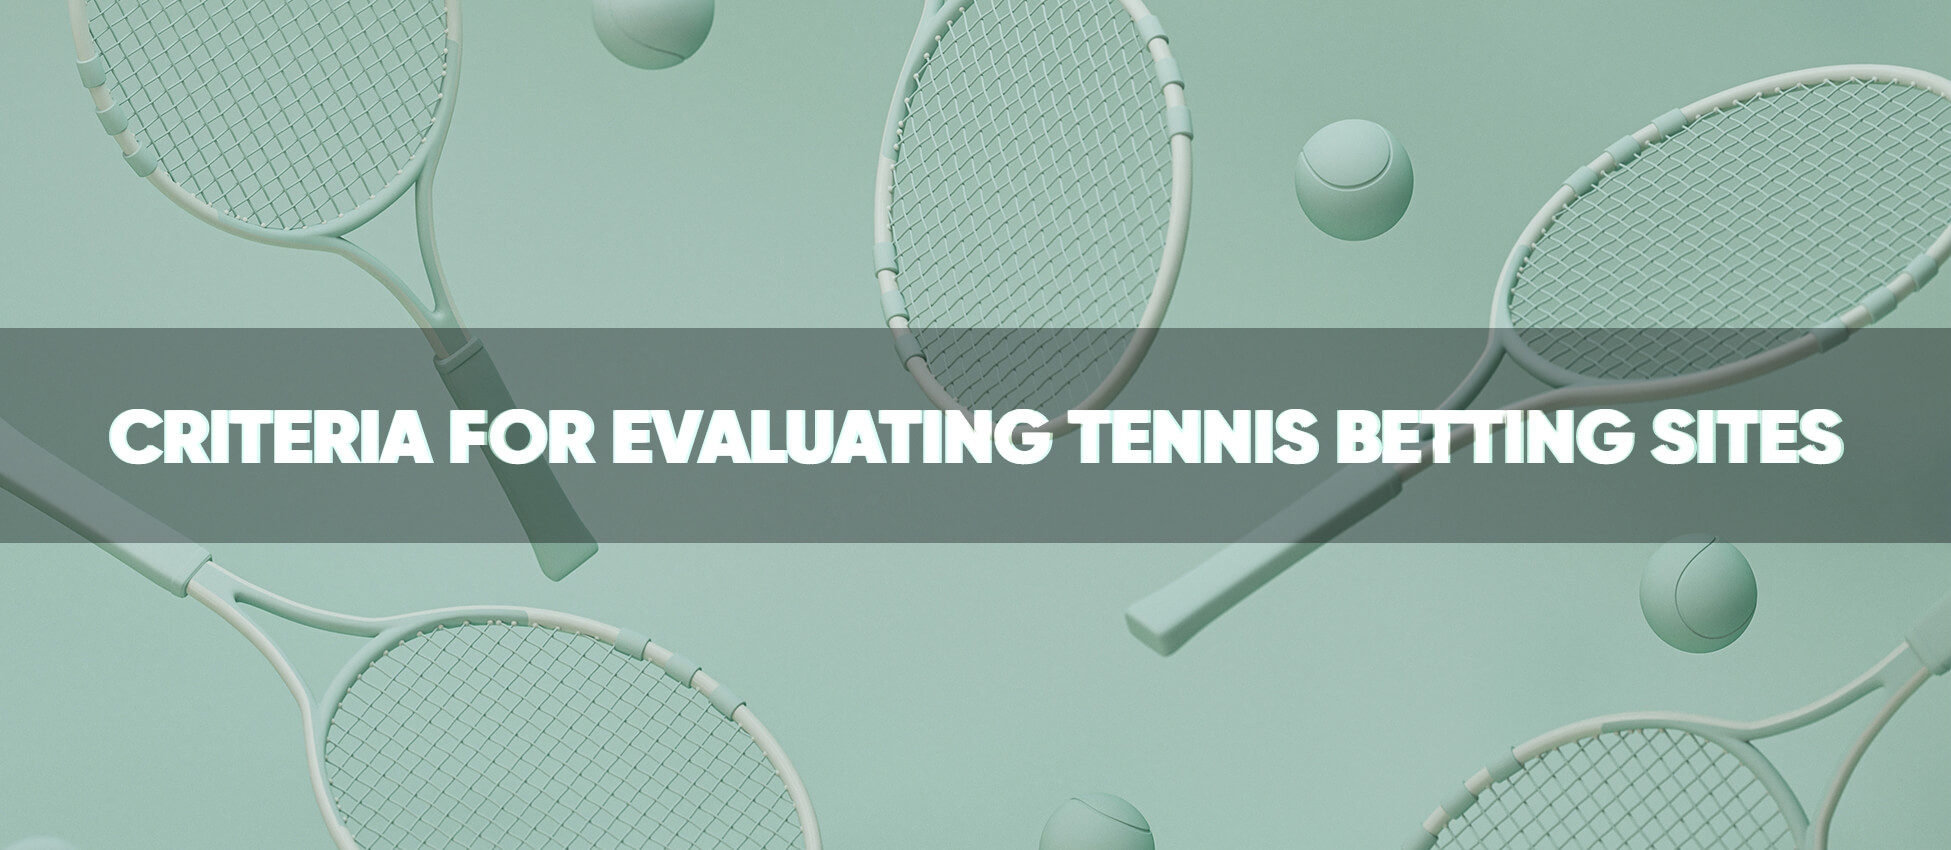 Criteria for evaluating tennis betting sites online